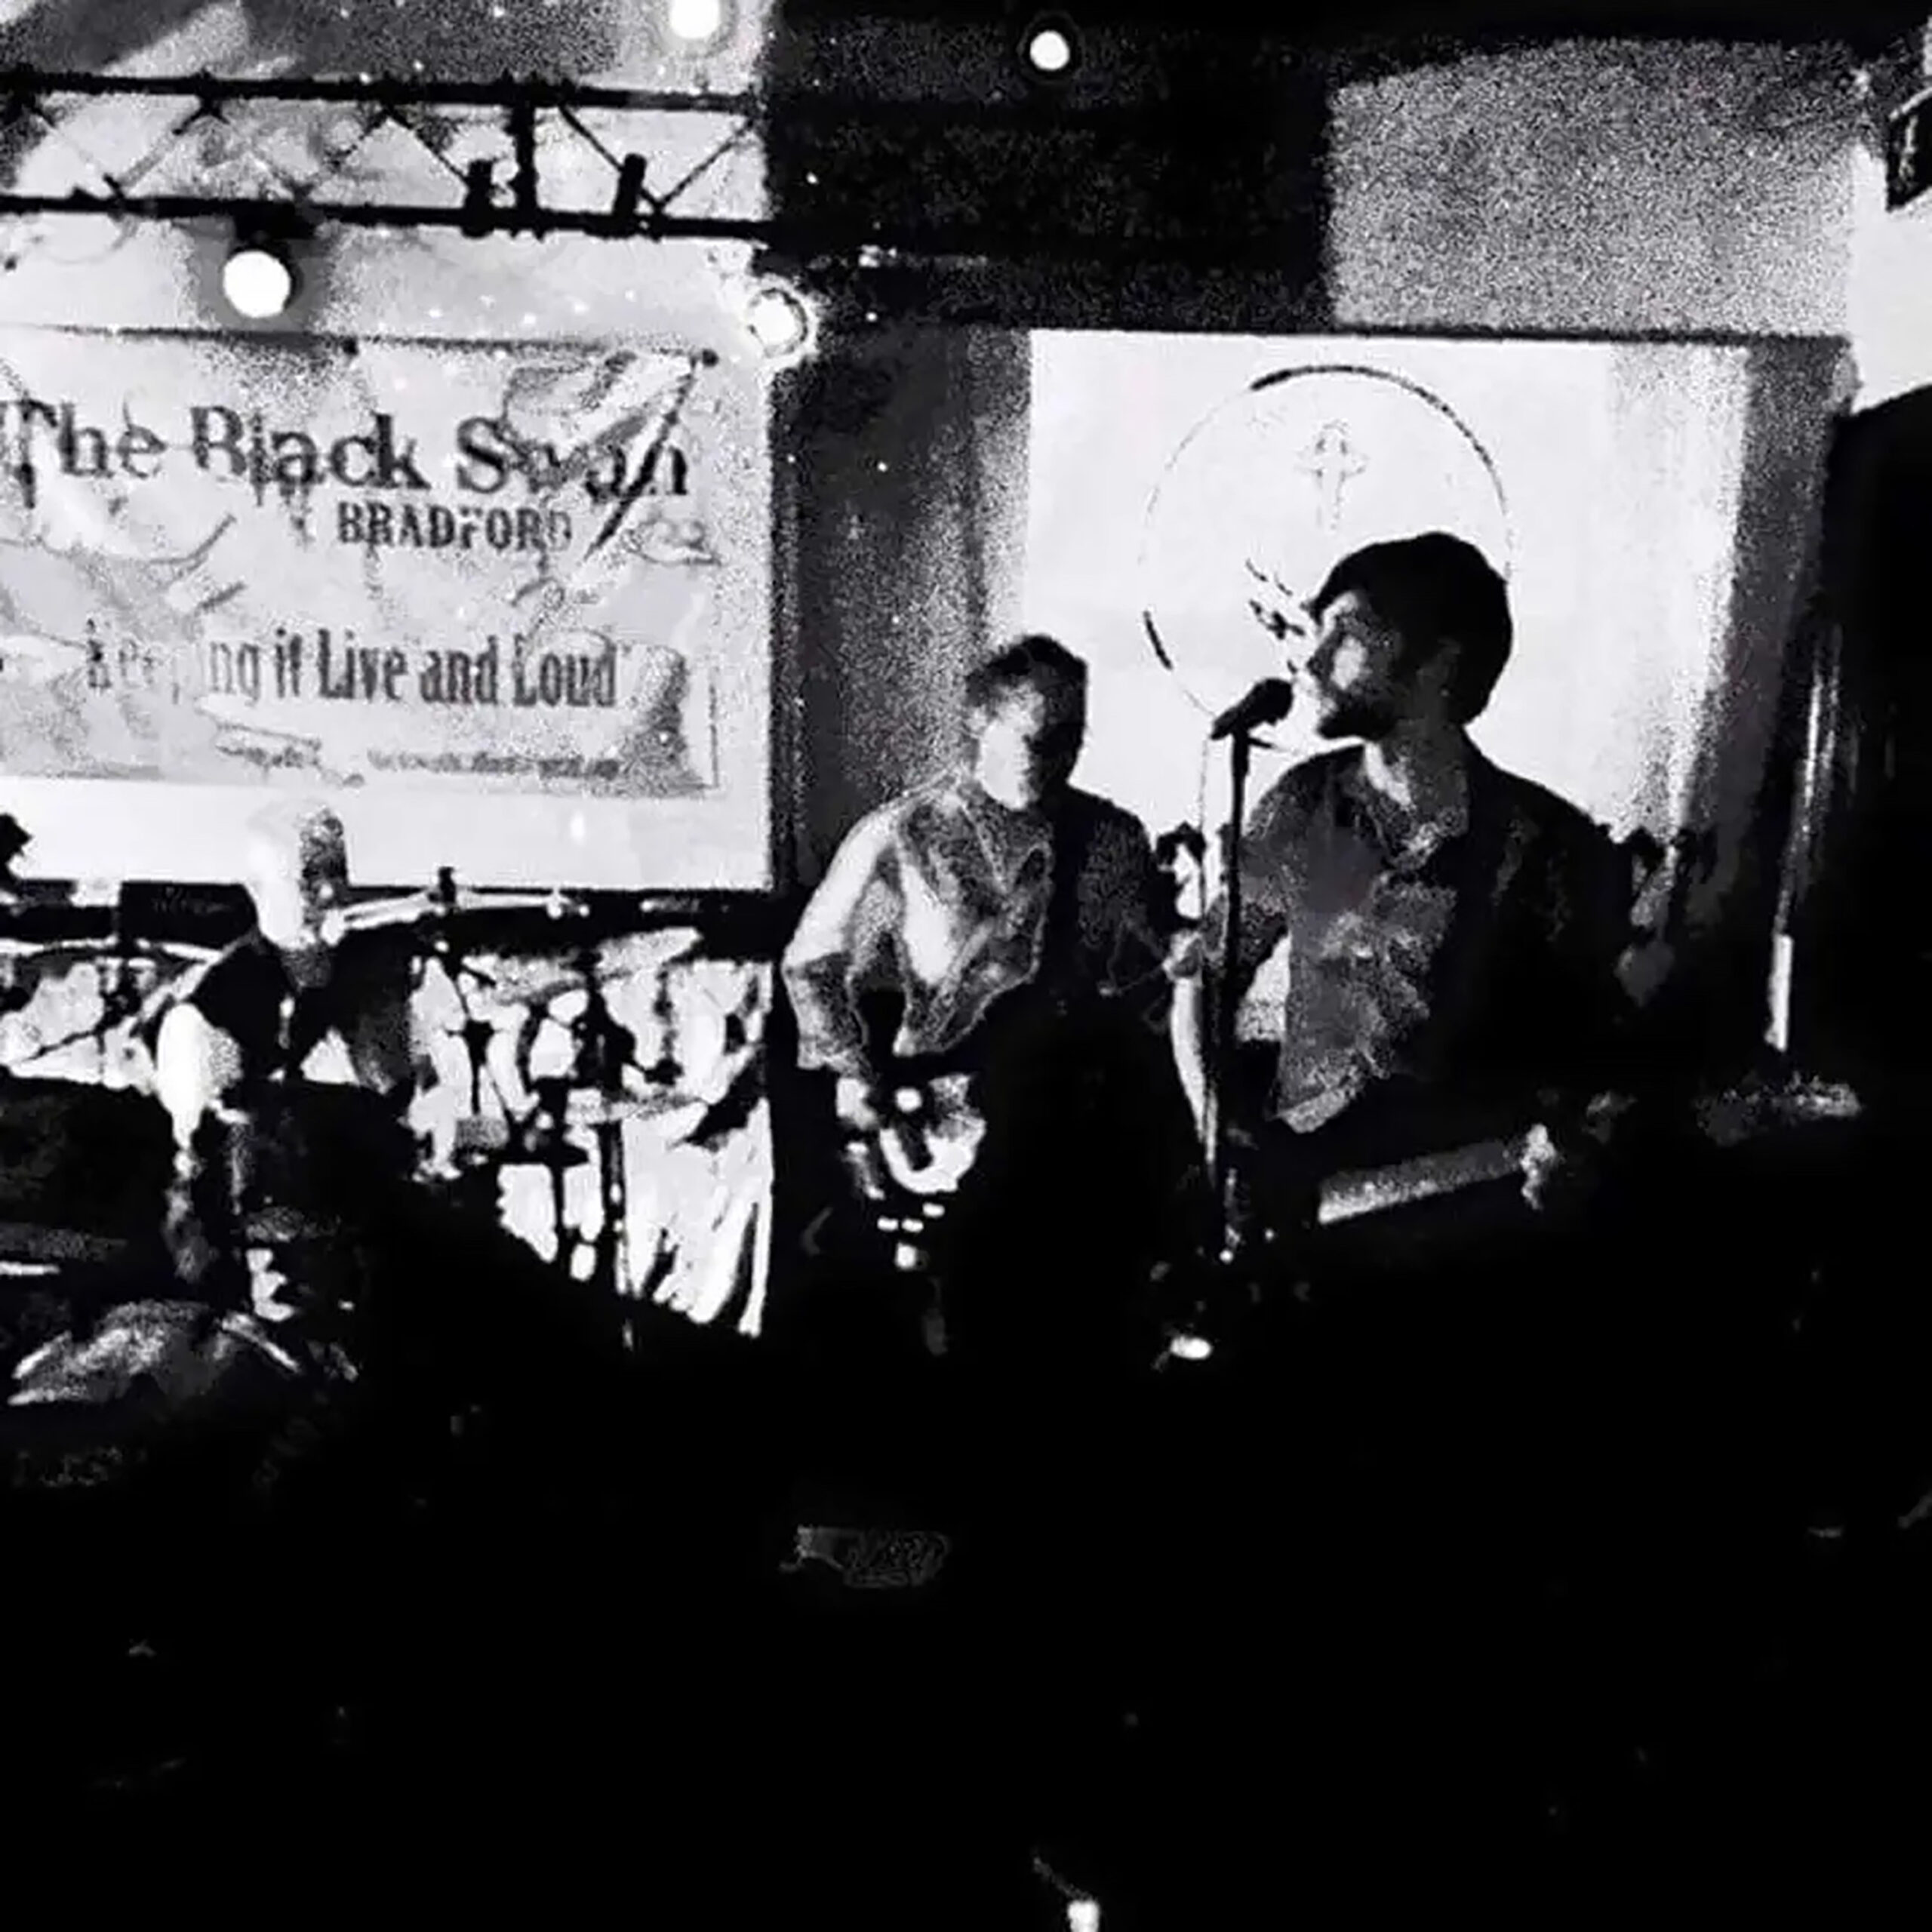 Dan playing with his band at The Black Swan Bradford.